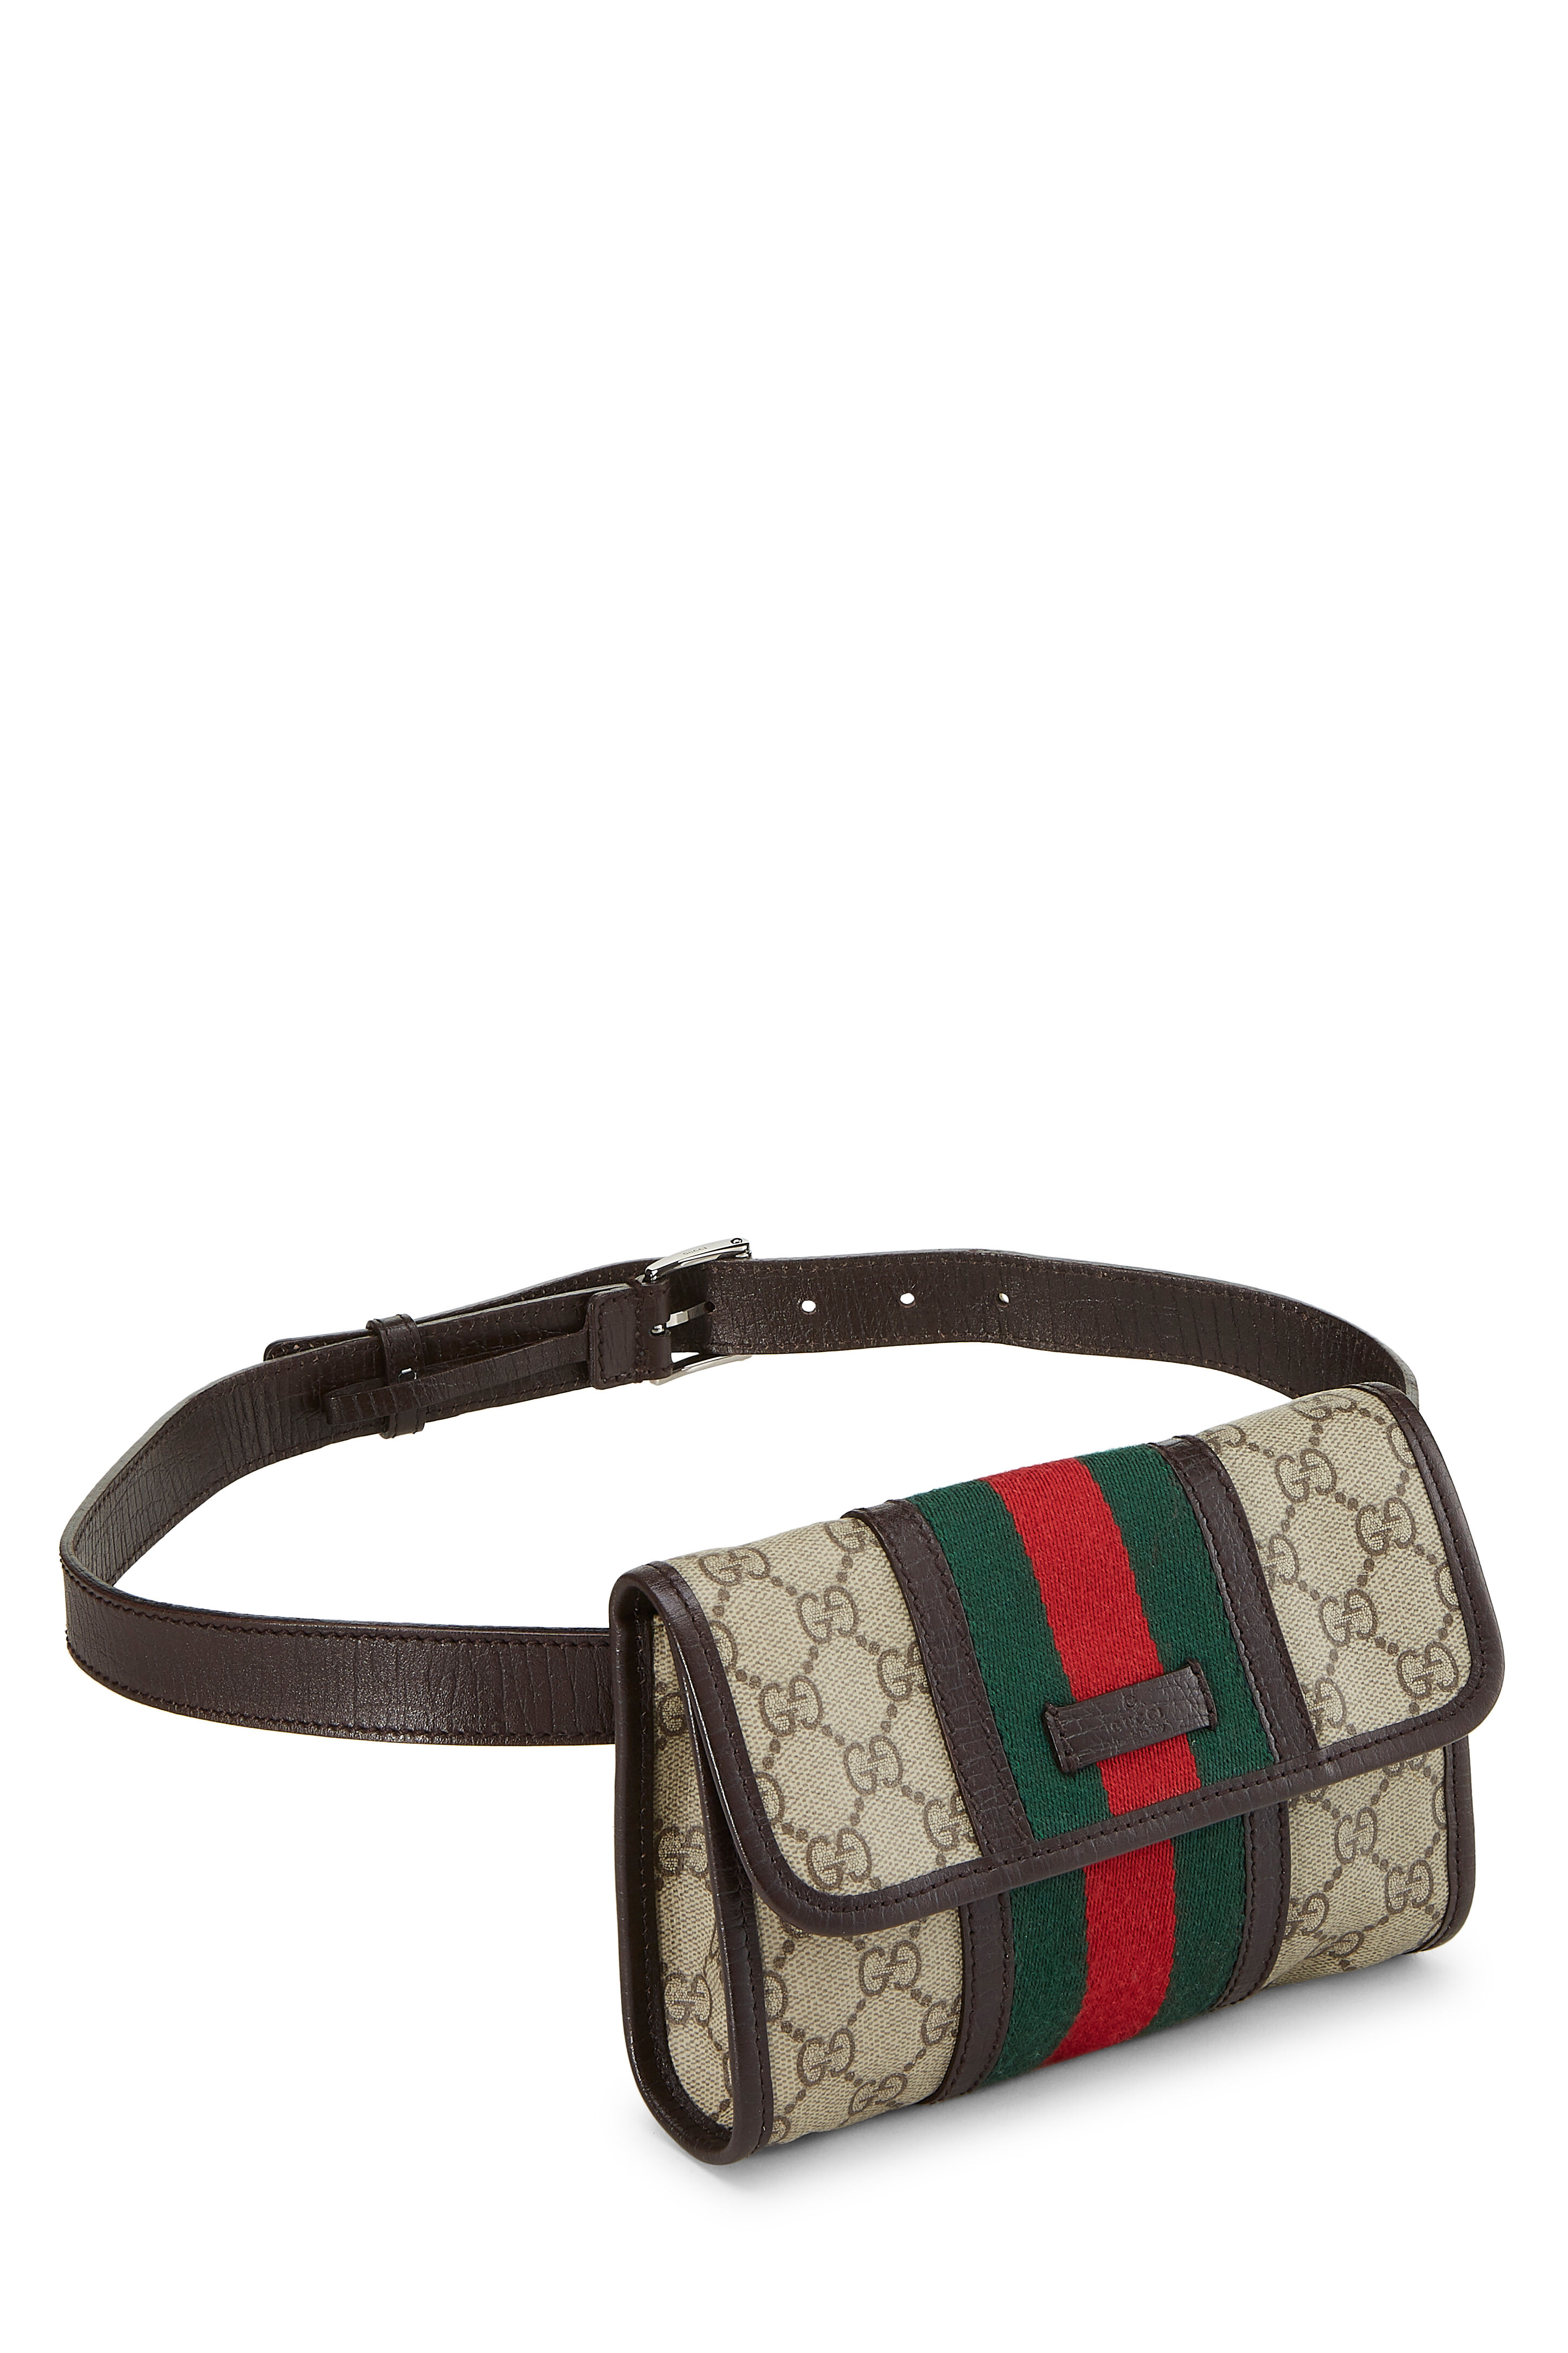 Gucci Belt Bag Fanny Pack GG Canvas